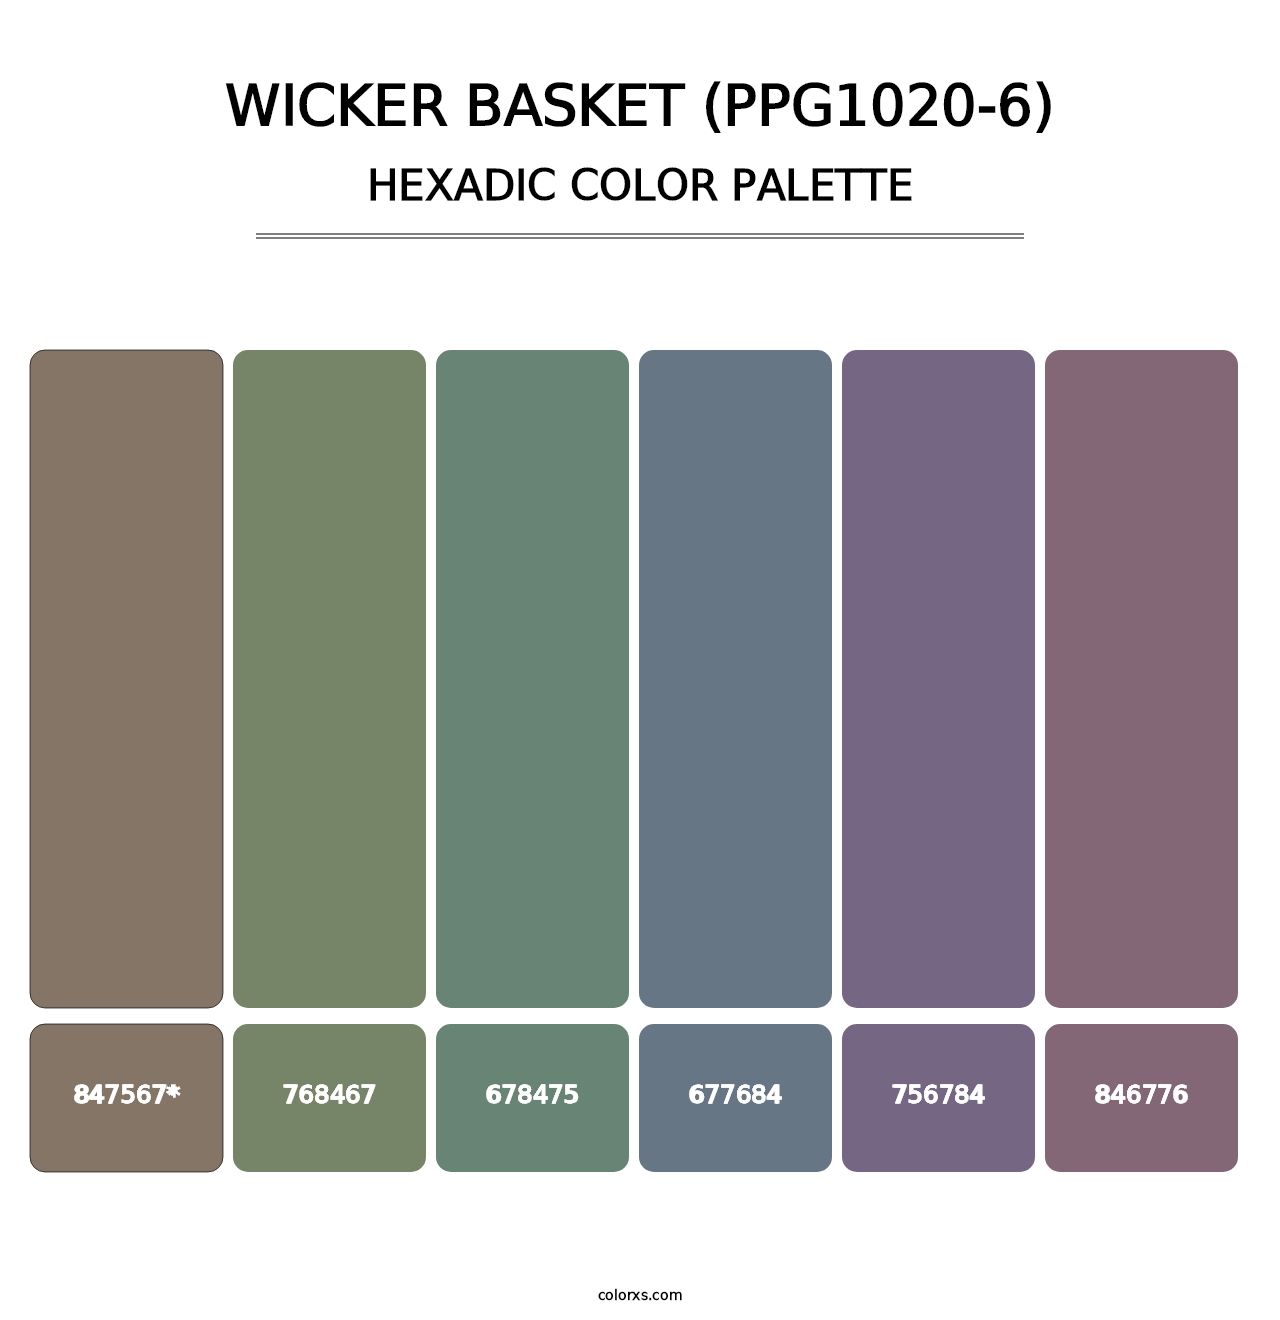 Wicker Basket (PPG1020-6) - Hexadic Color Palette